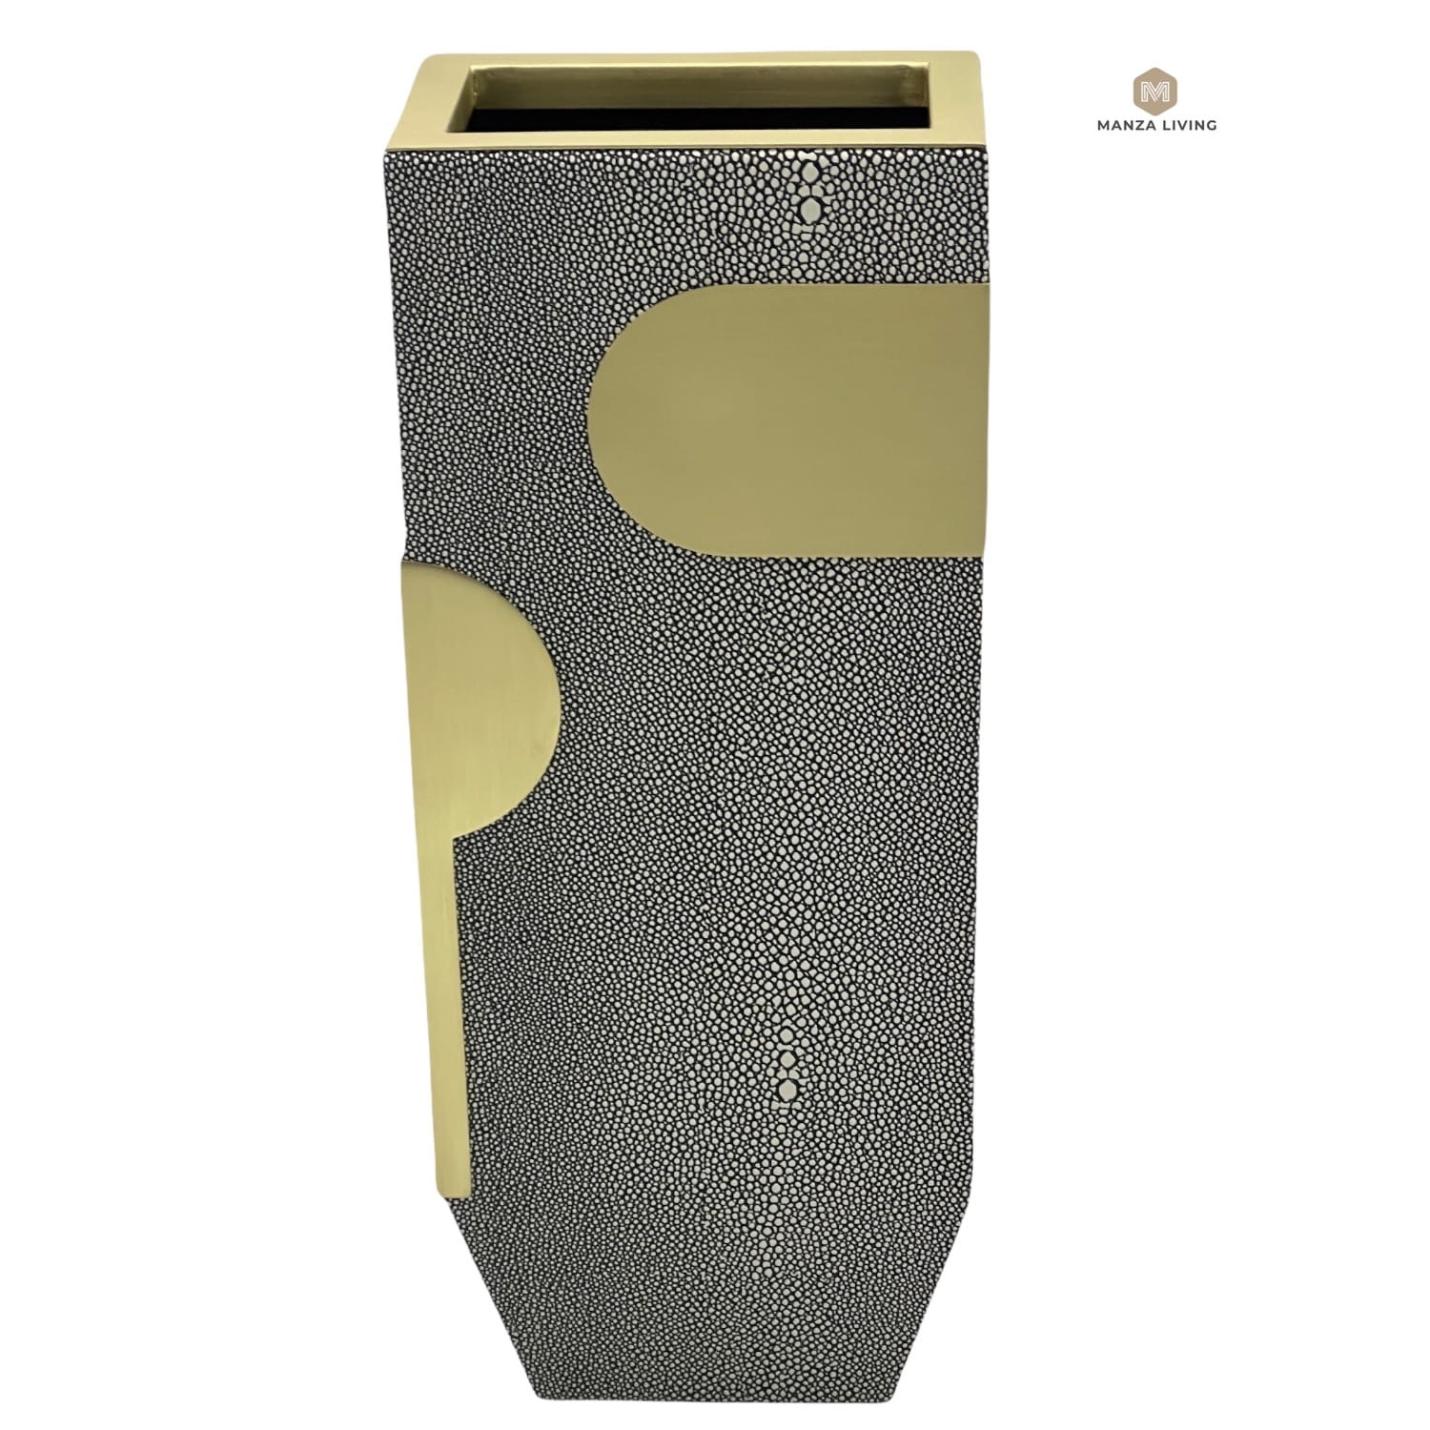 Luxe Gouden Vaas - Rechthoek - H37cm - Manza Living 1